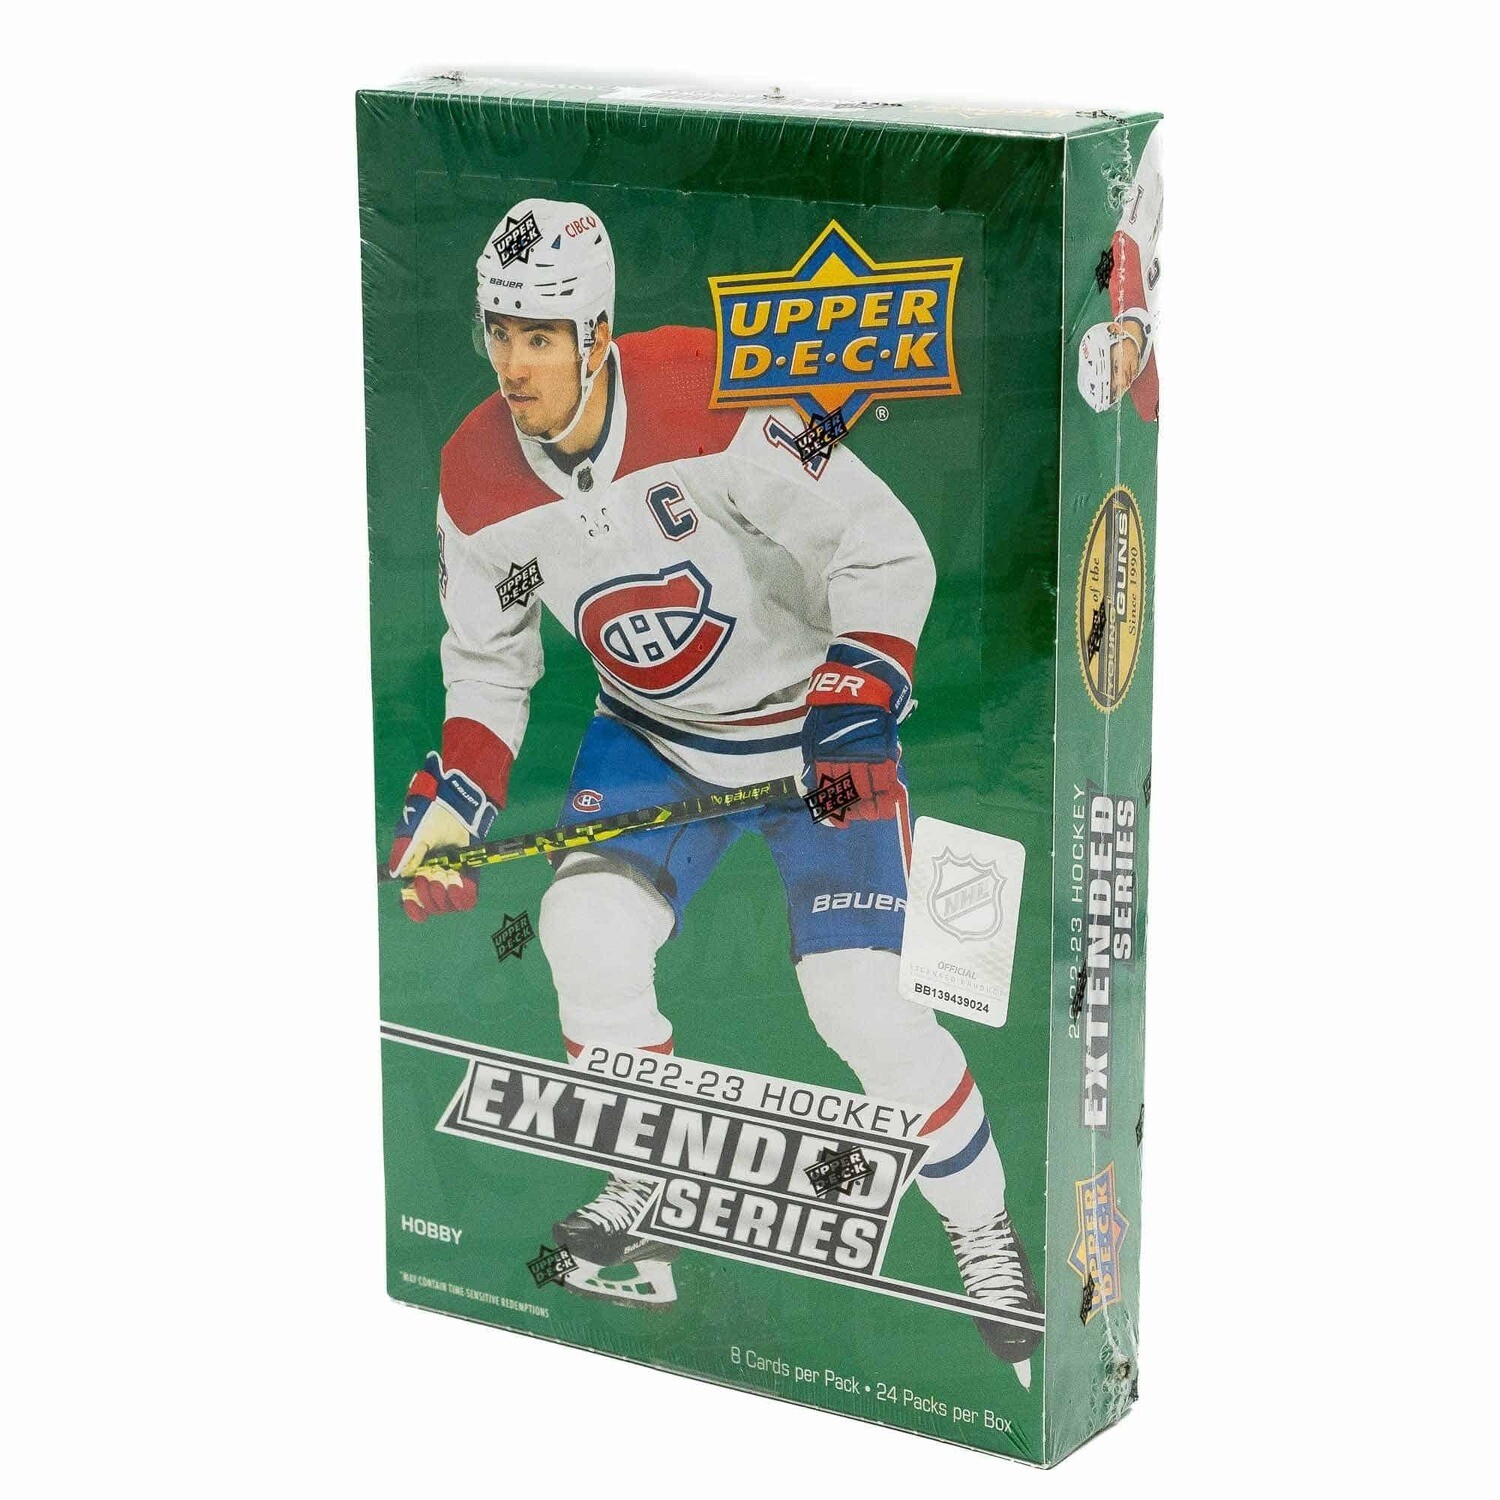 Upper Deck Extended Series Hockey Hobby Box 2022/23